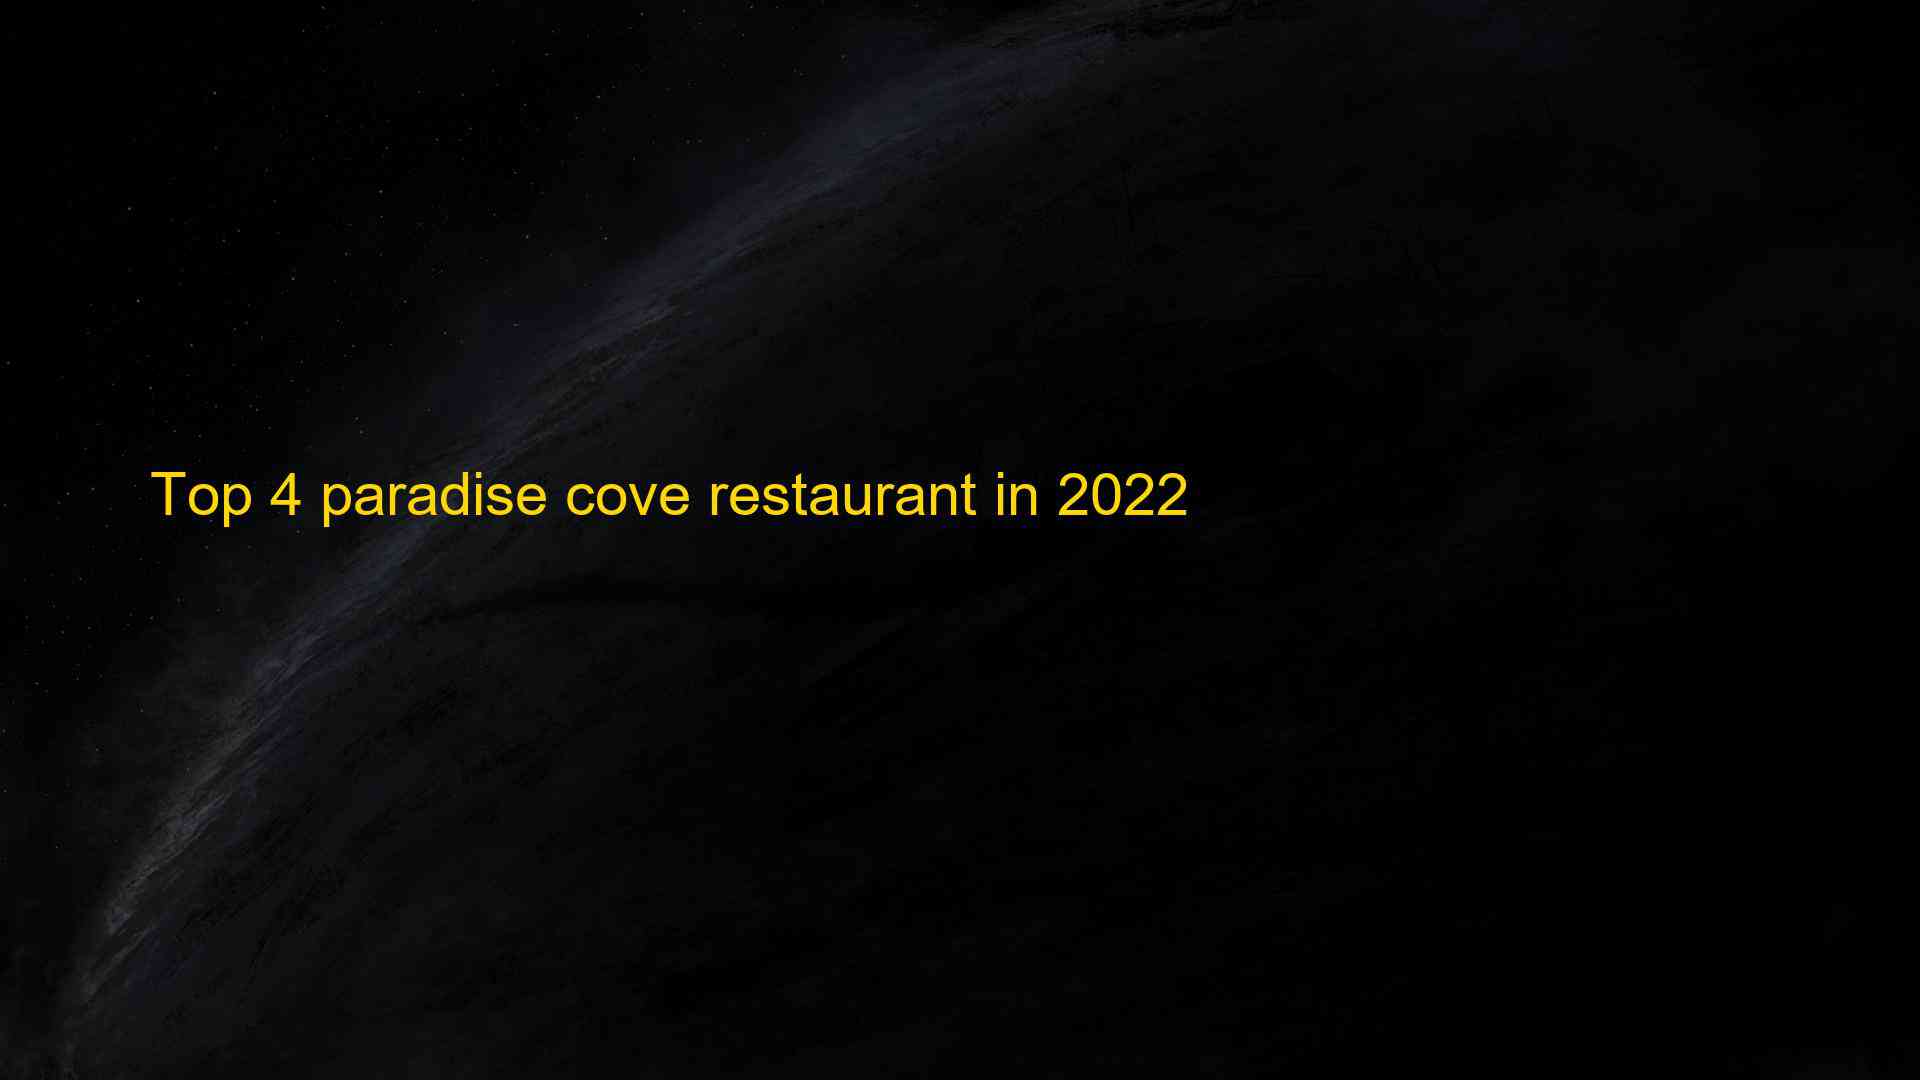 Top 4 paradise cove restaurant in 2022 1662838763